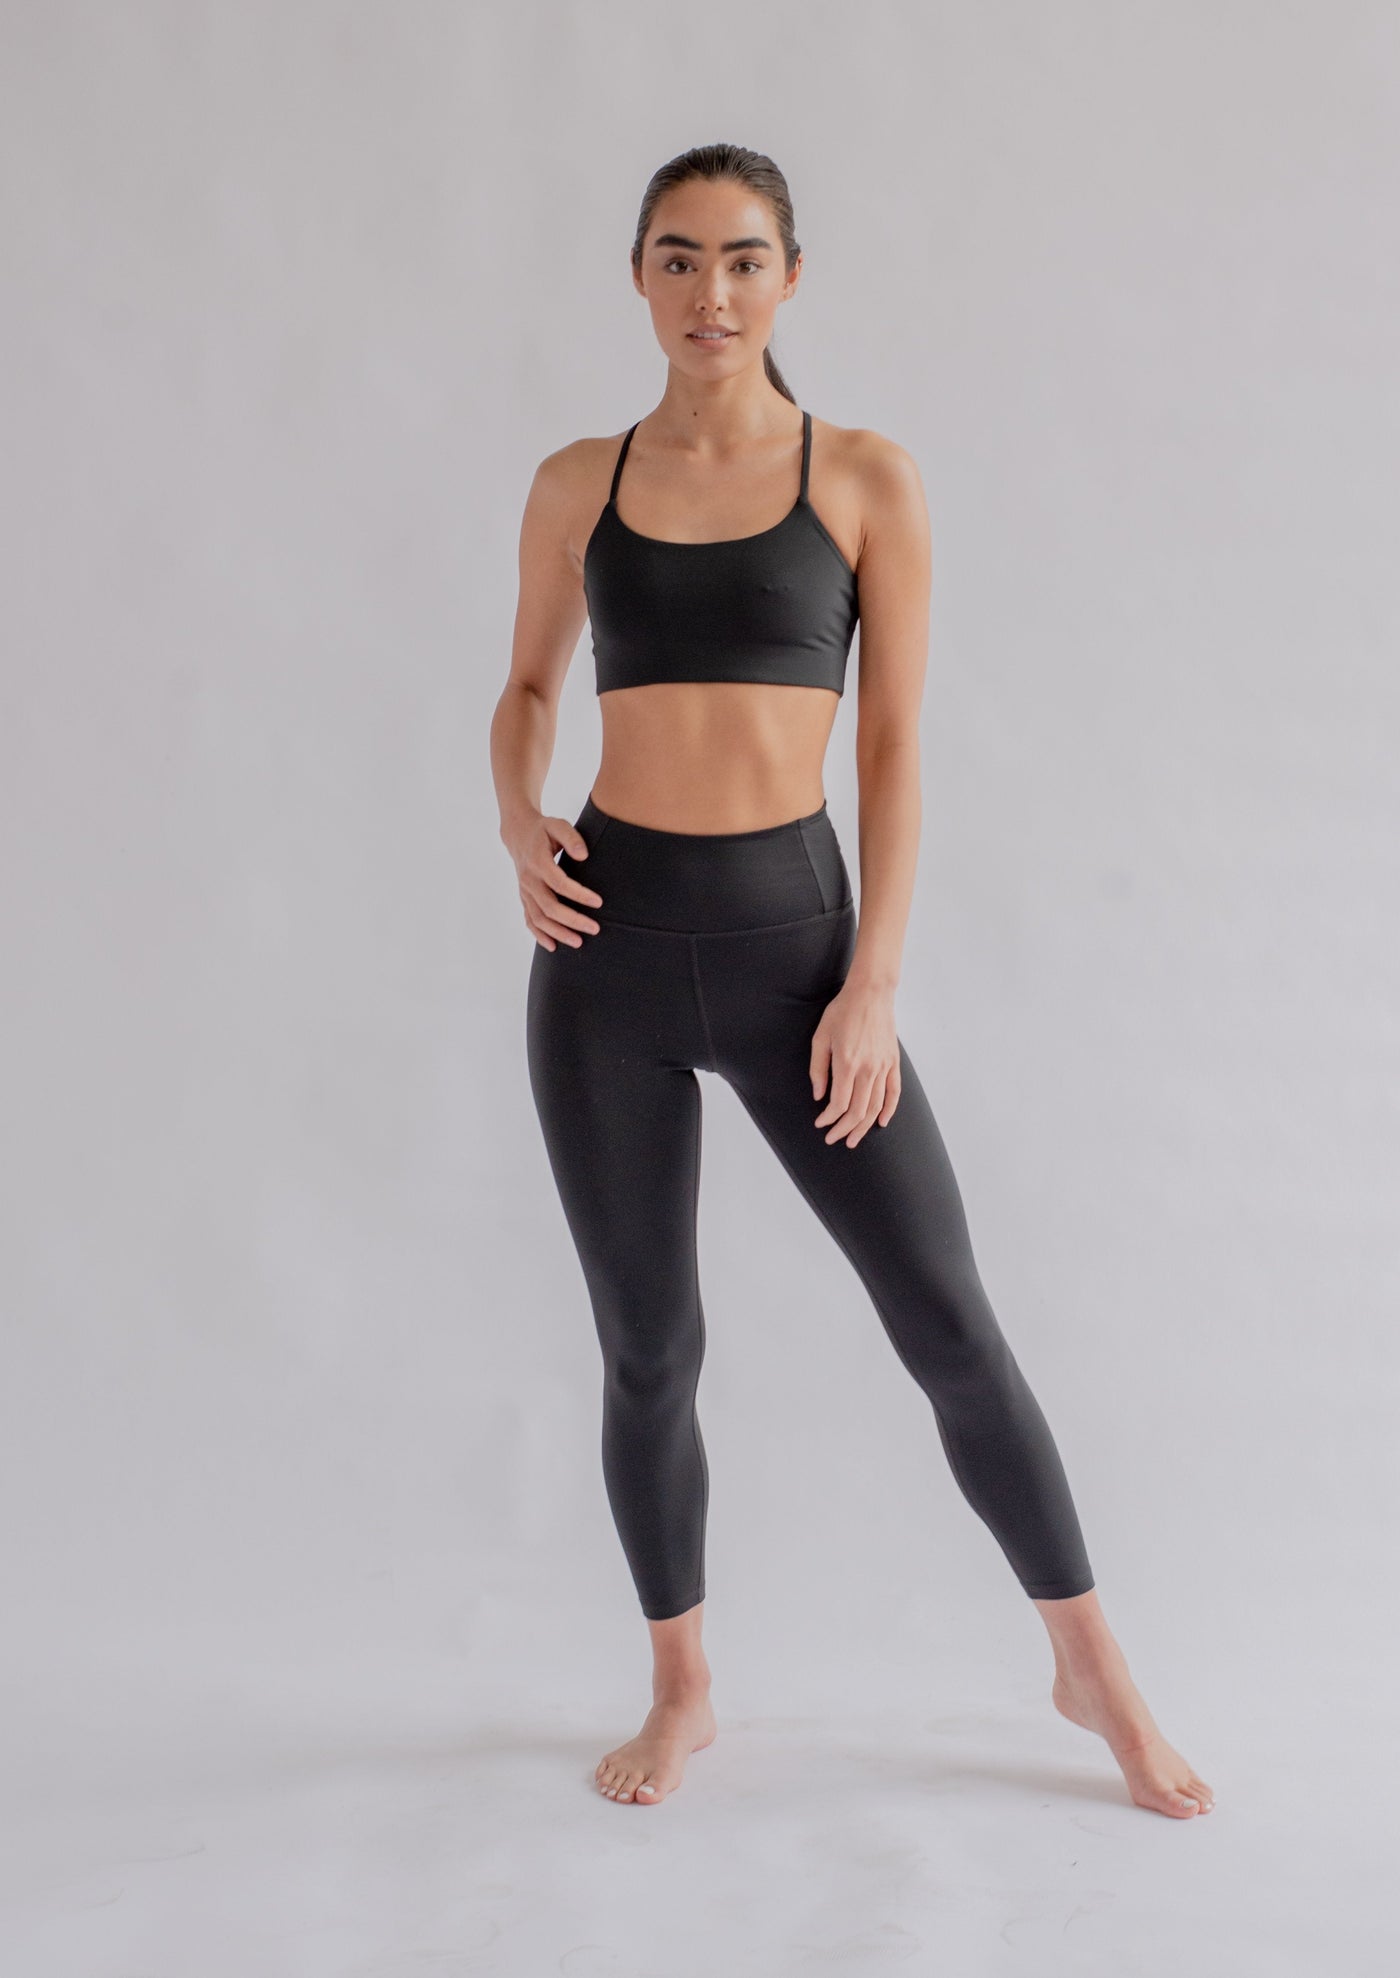 Woman in black leggings and sports bra